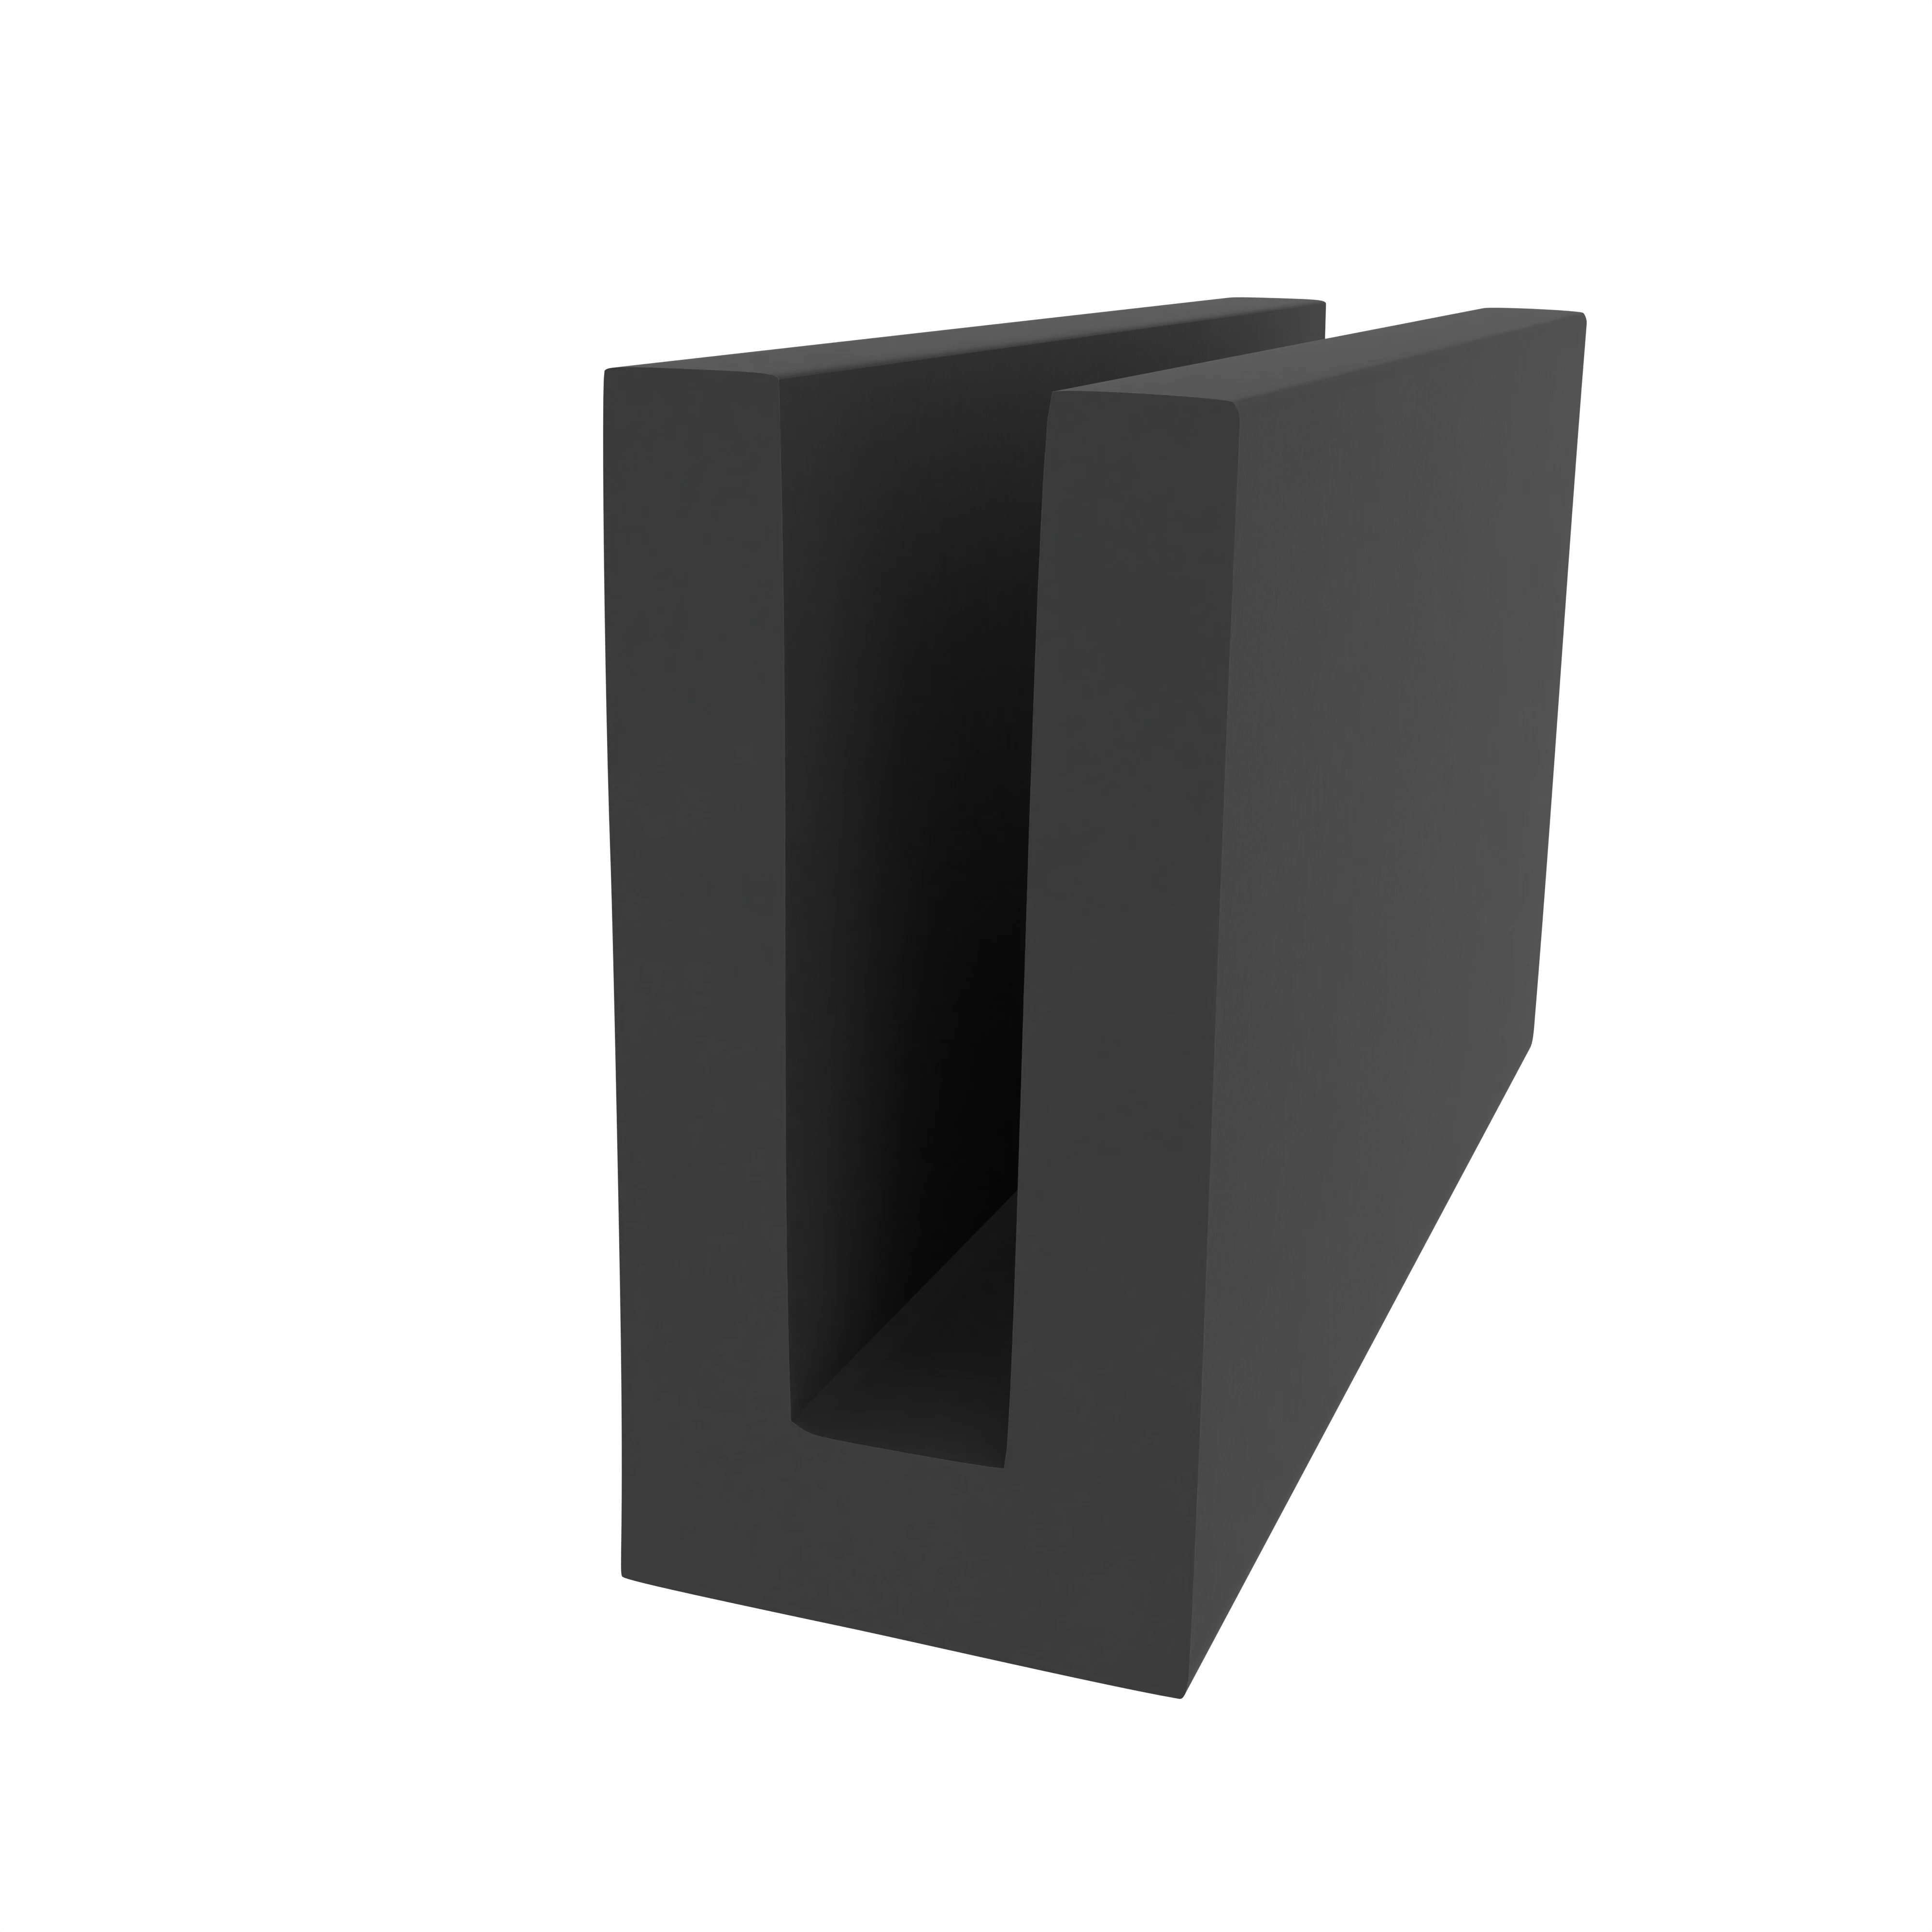 Kantenschutzprofil | Höhe: 9,2 mm | Farbe: schwarz